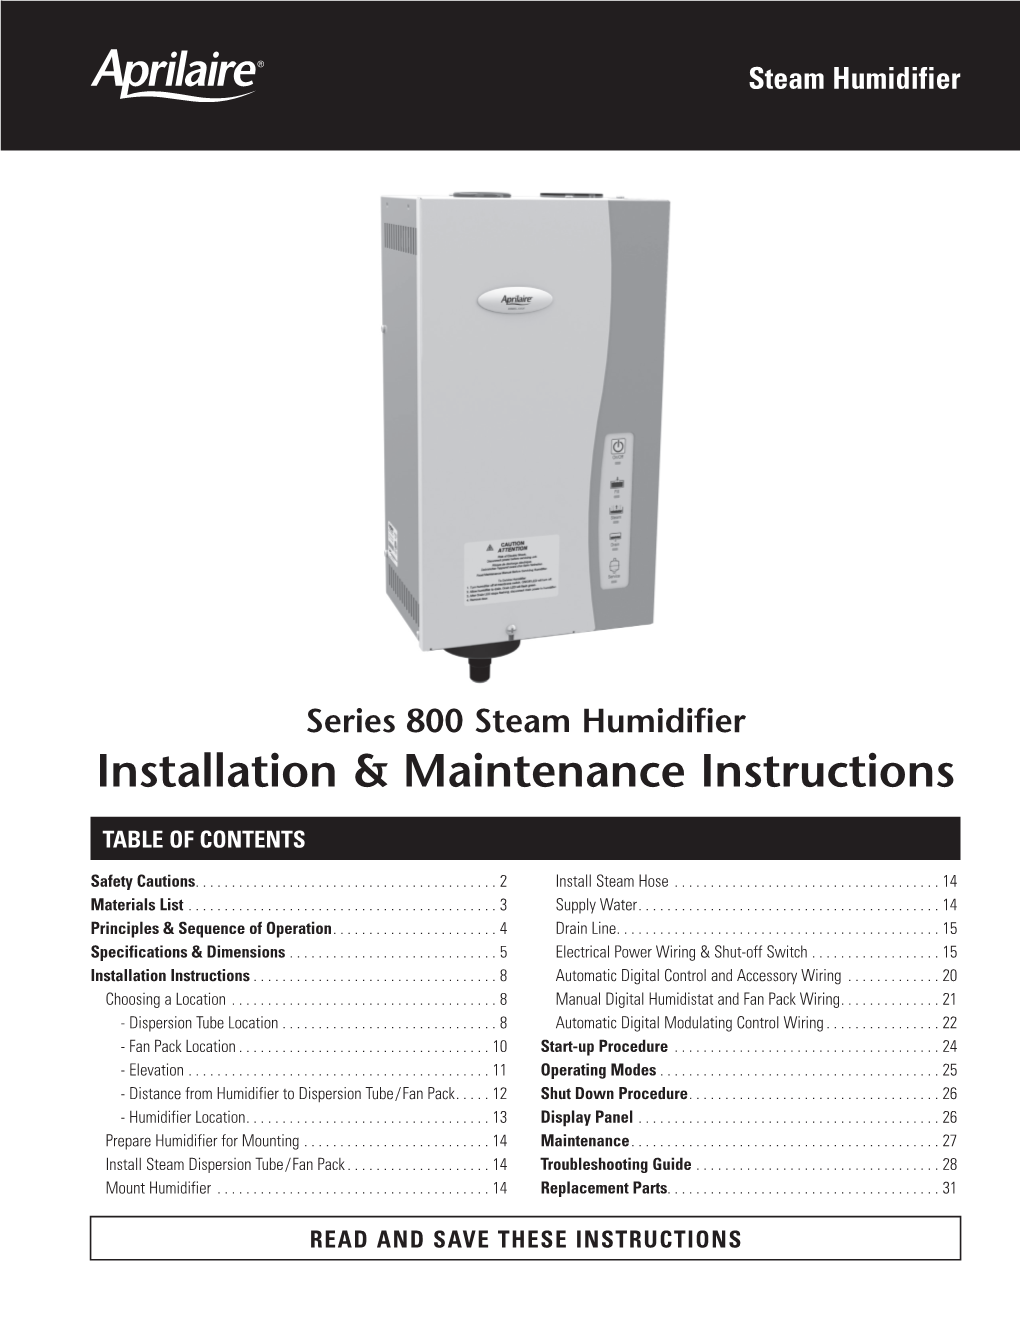 Series 800 Steam Humidifier Installation & Maintenance